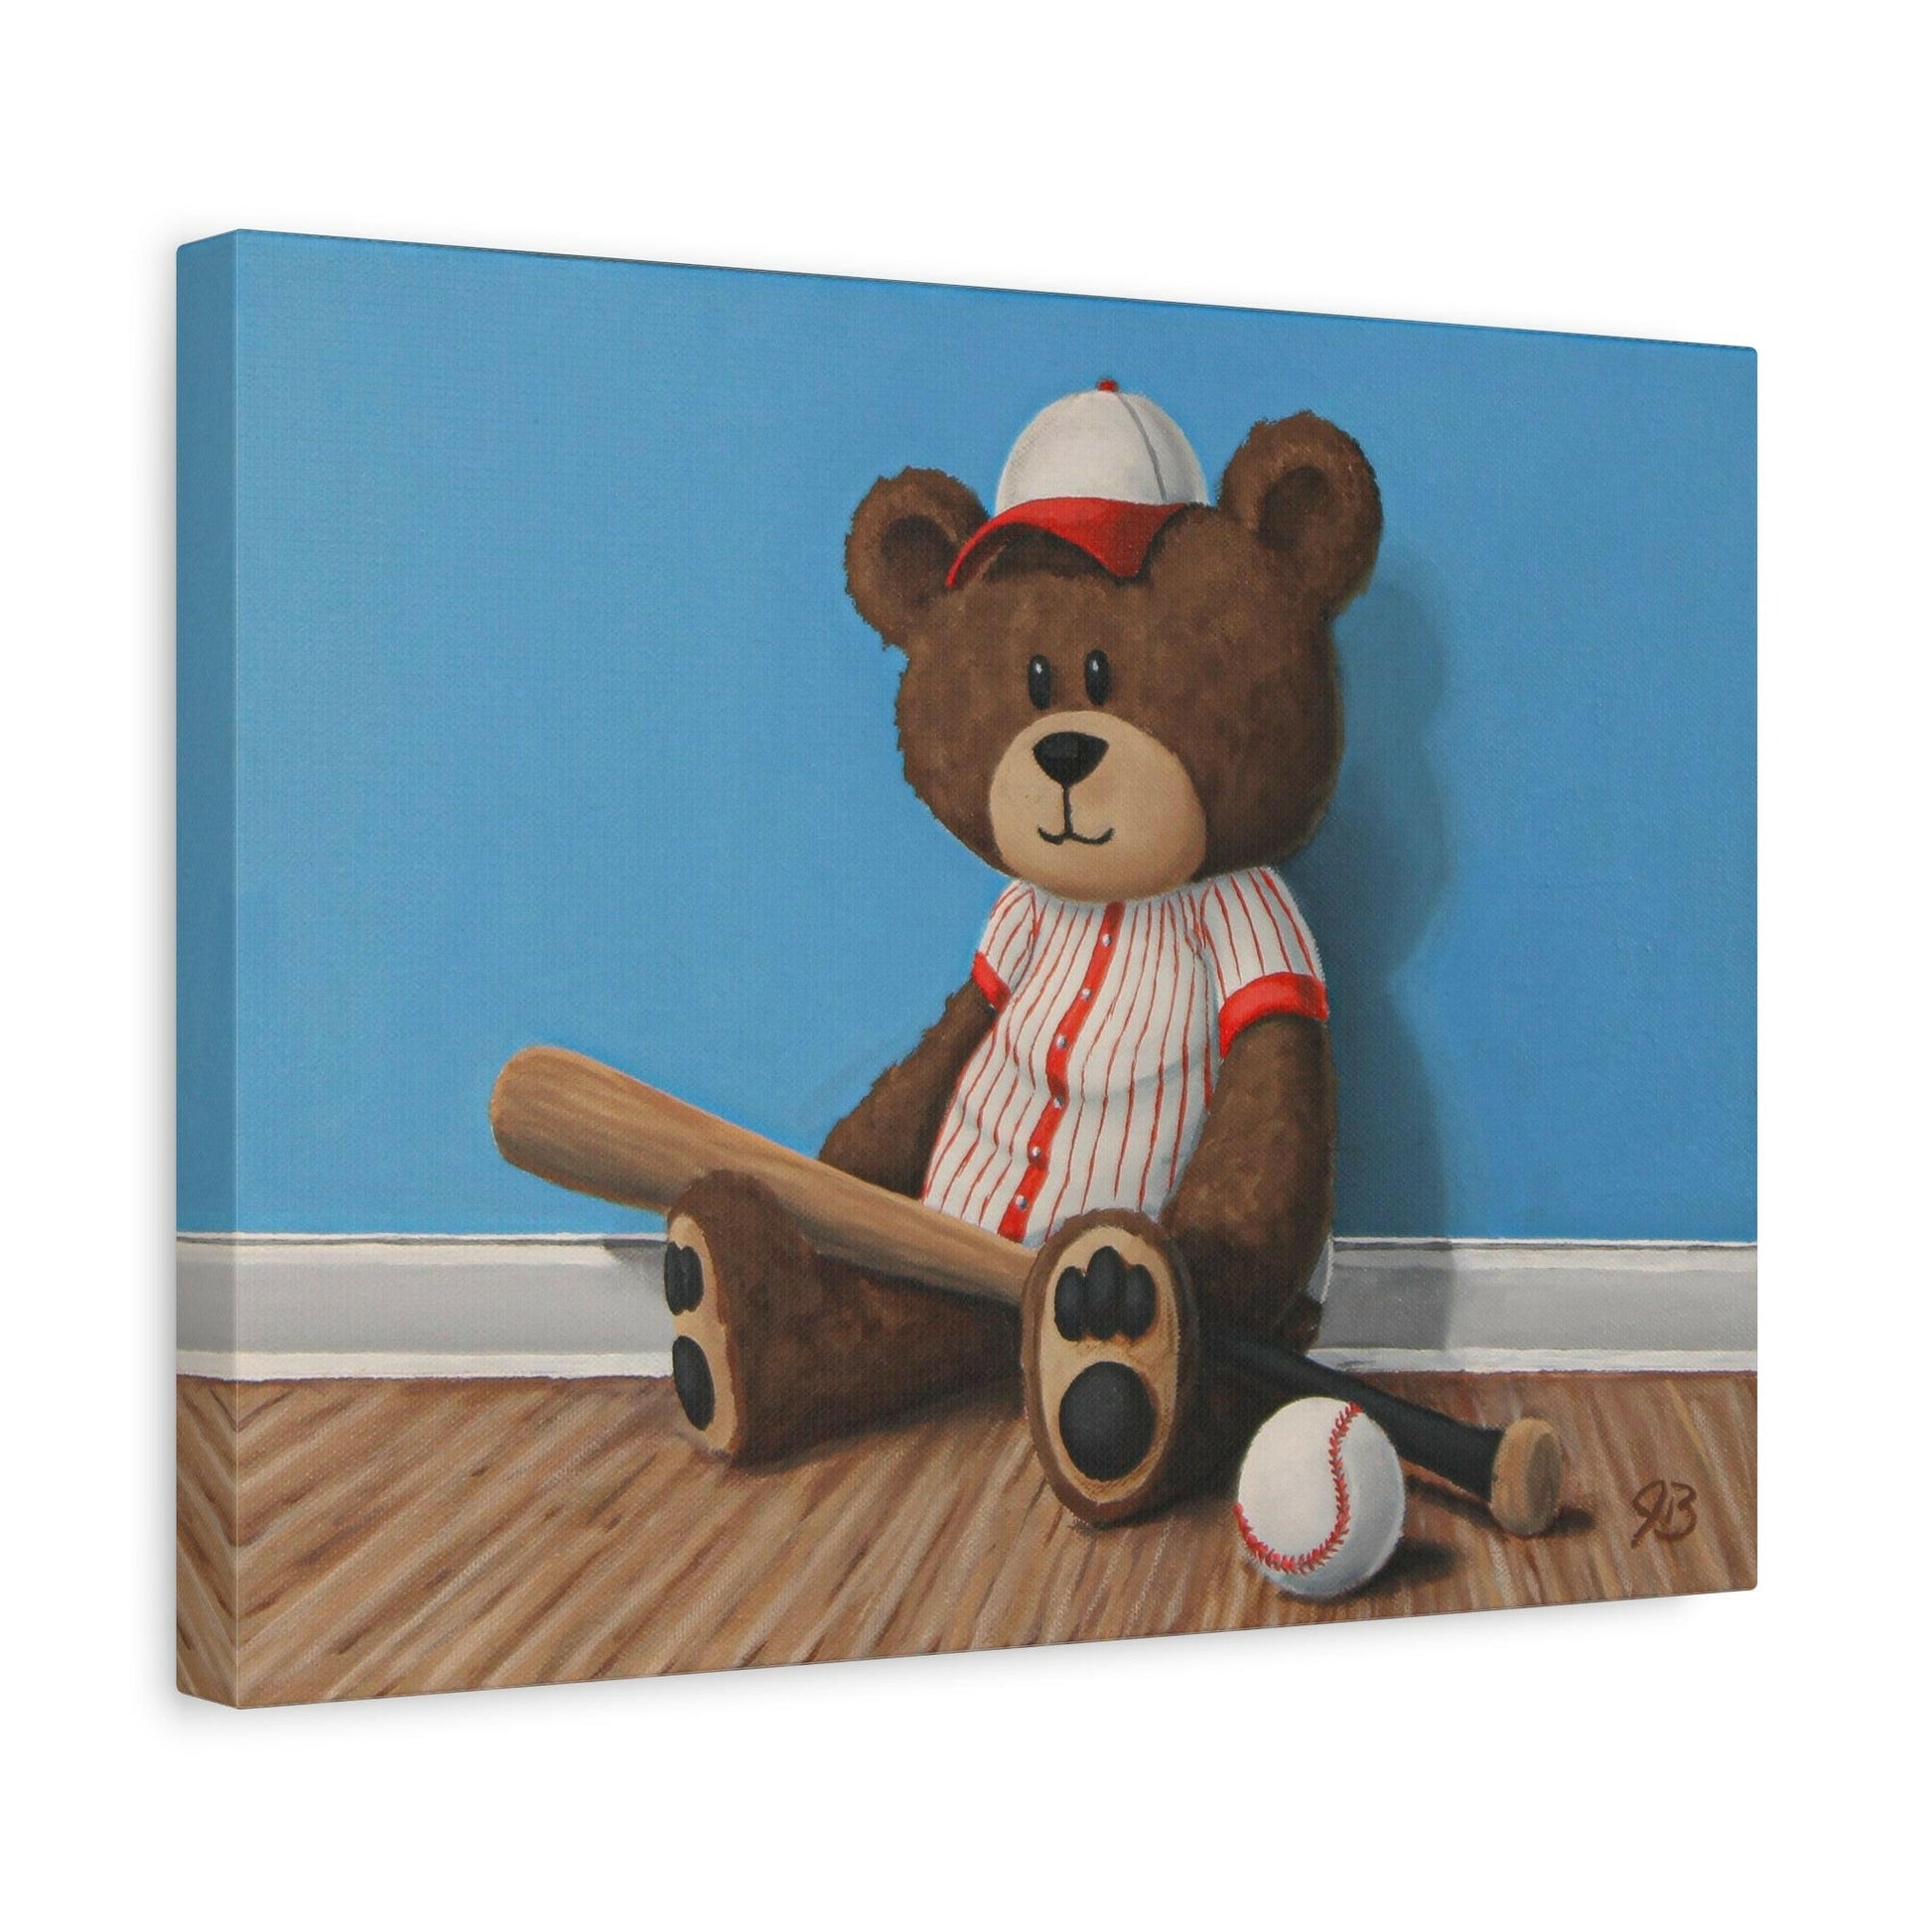 Teddy bear holding baseball bat angled